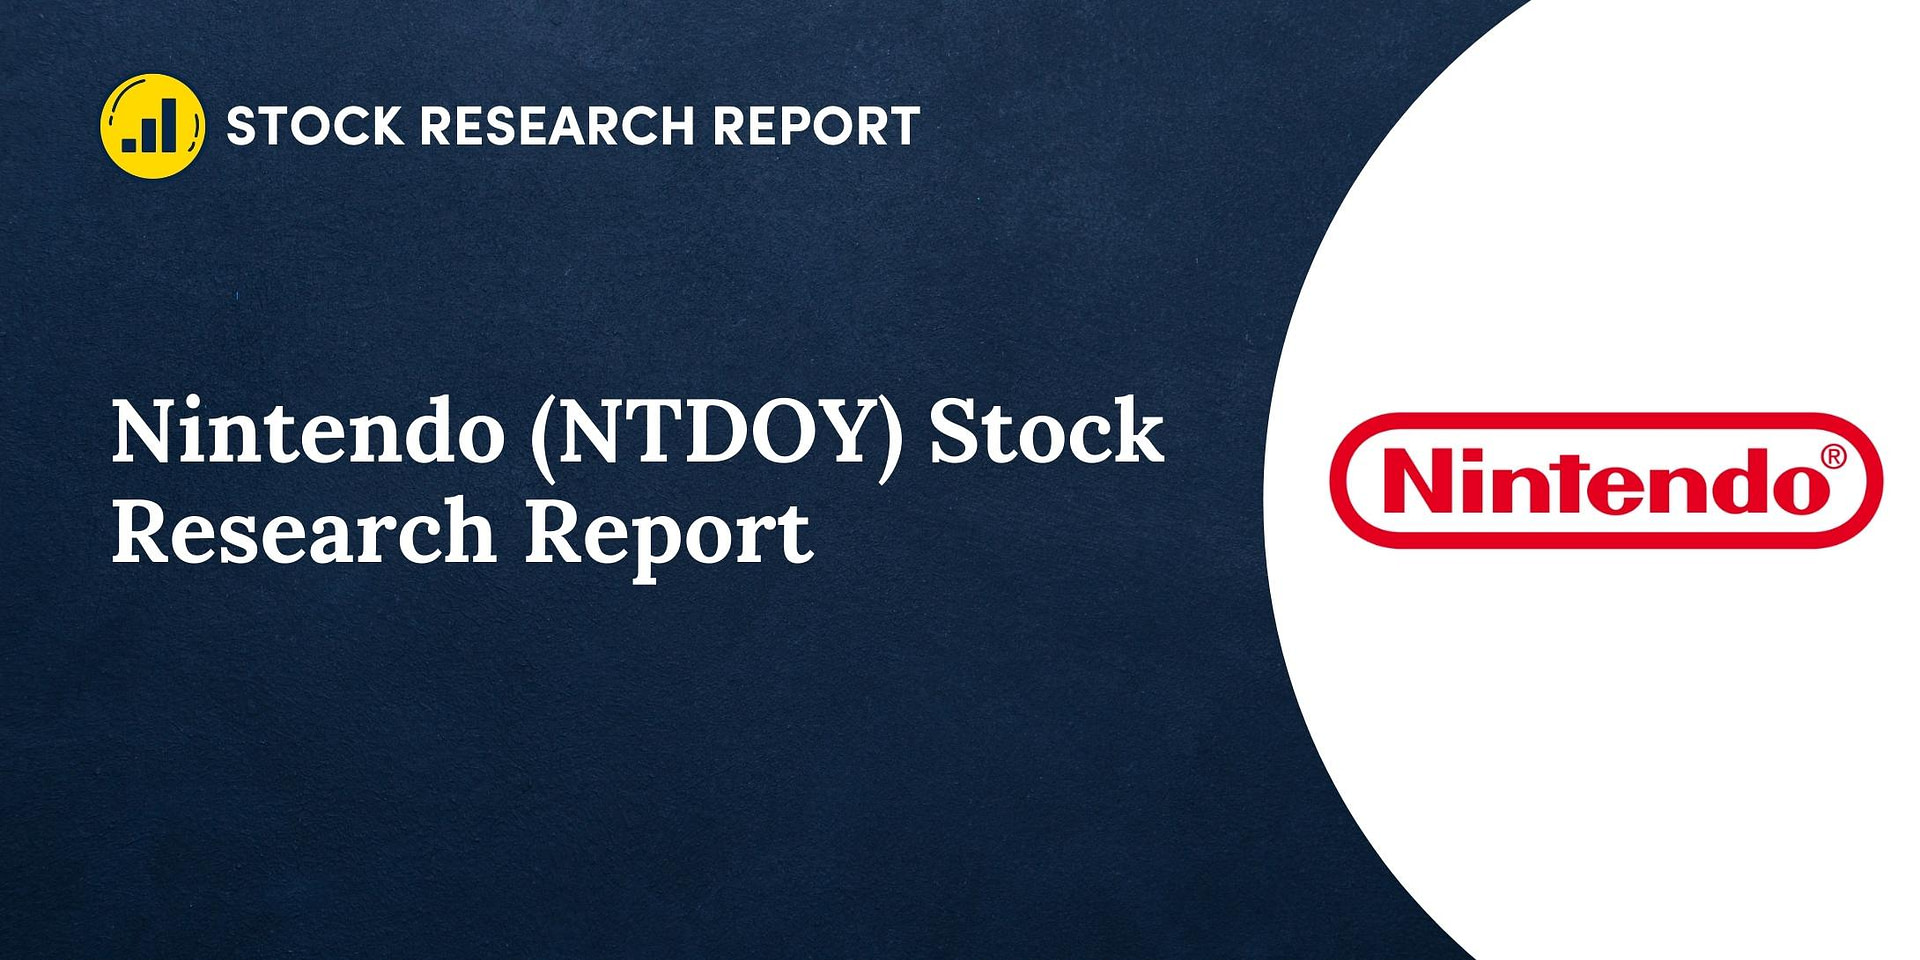 Nintendo Stock Research Report